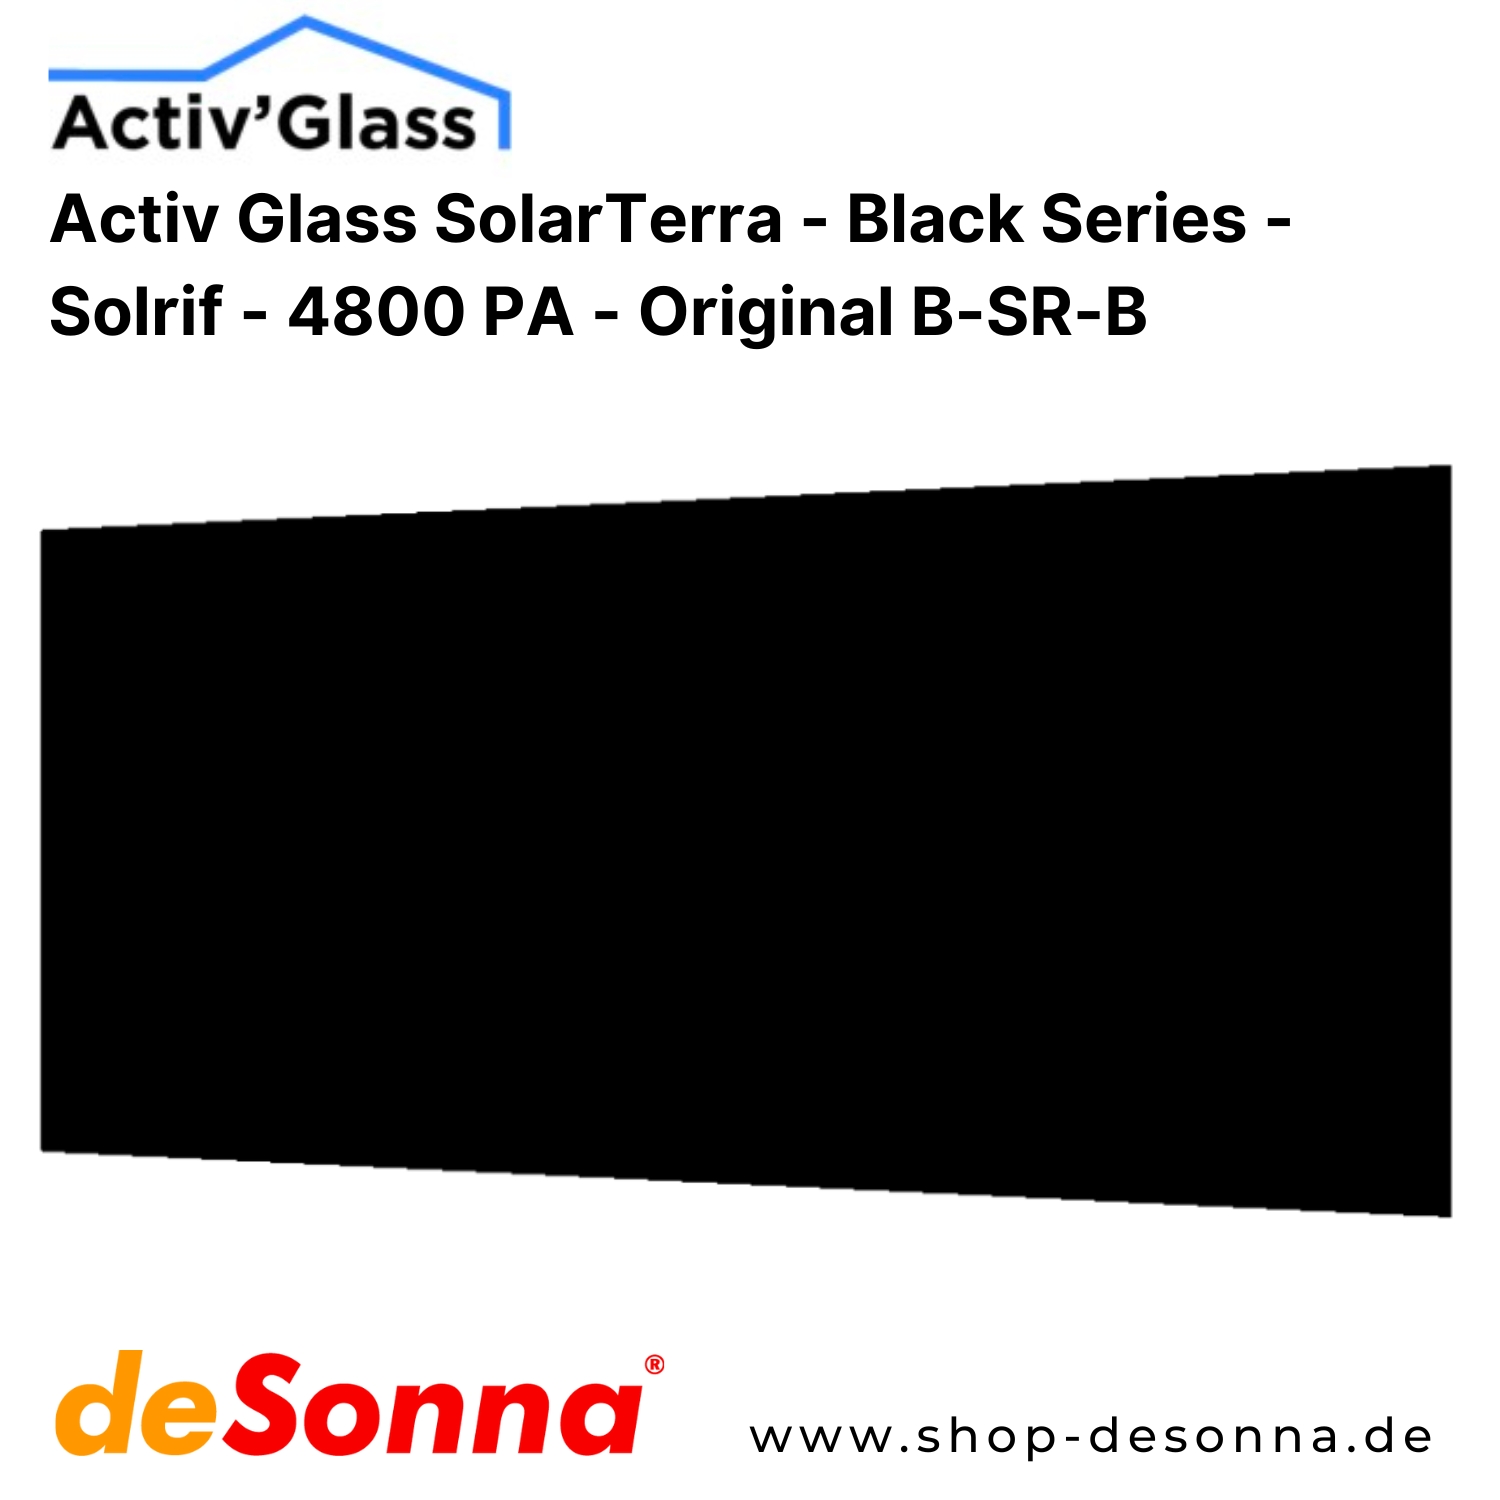 Activ Glass SolarTerra Original B-SR-B - Black Series - 145 Wp - Solrif-Indach-Solarmodul